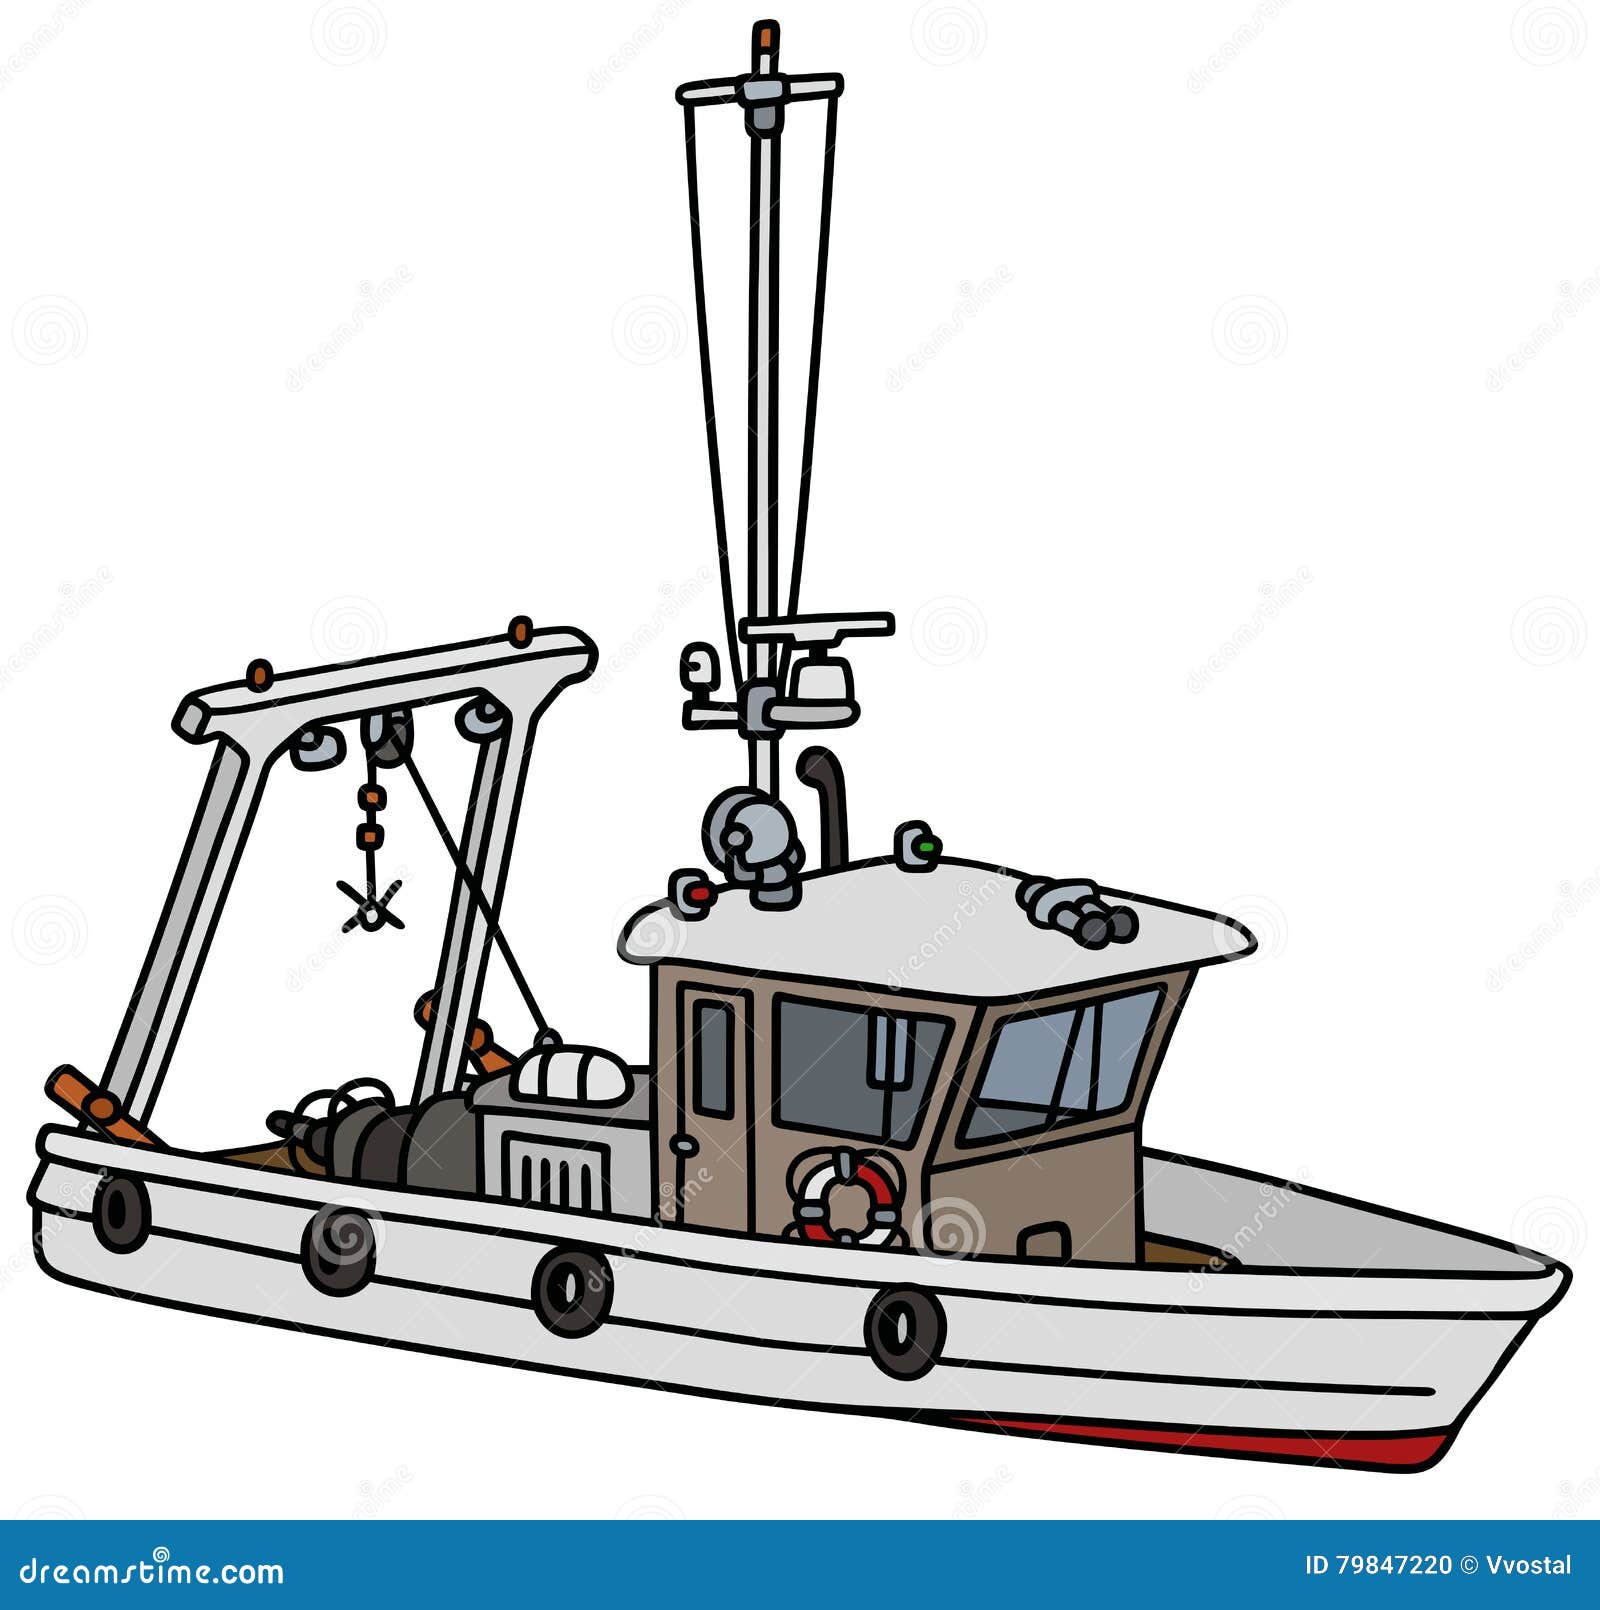 Small fishing boat stock vector. Illustration of winch - 79847220